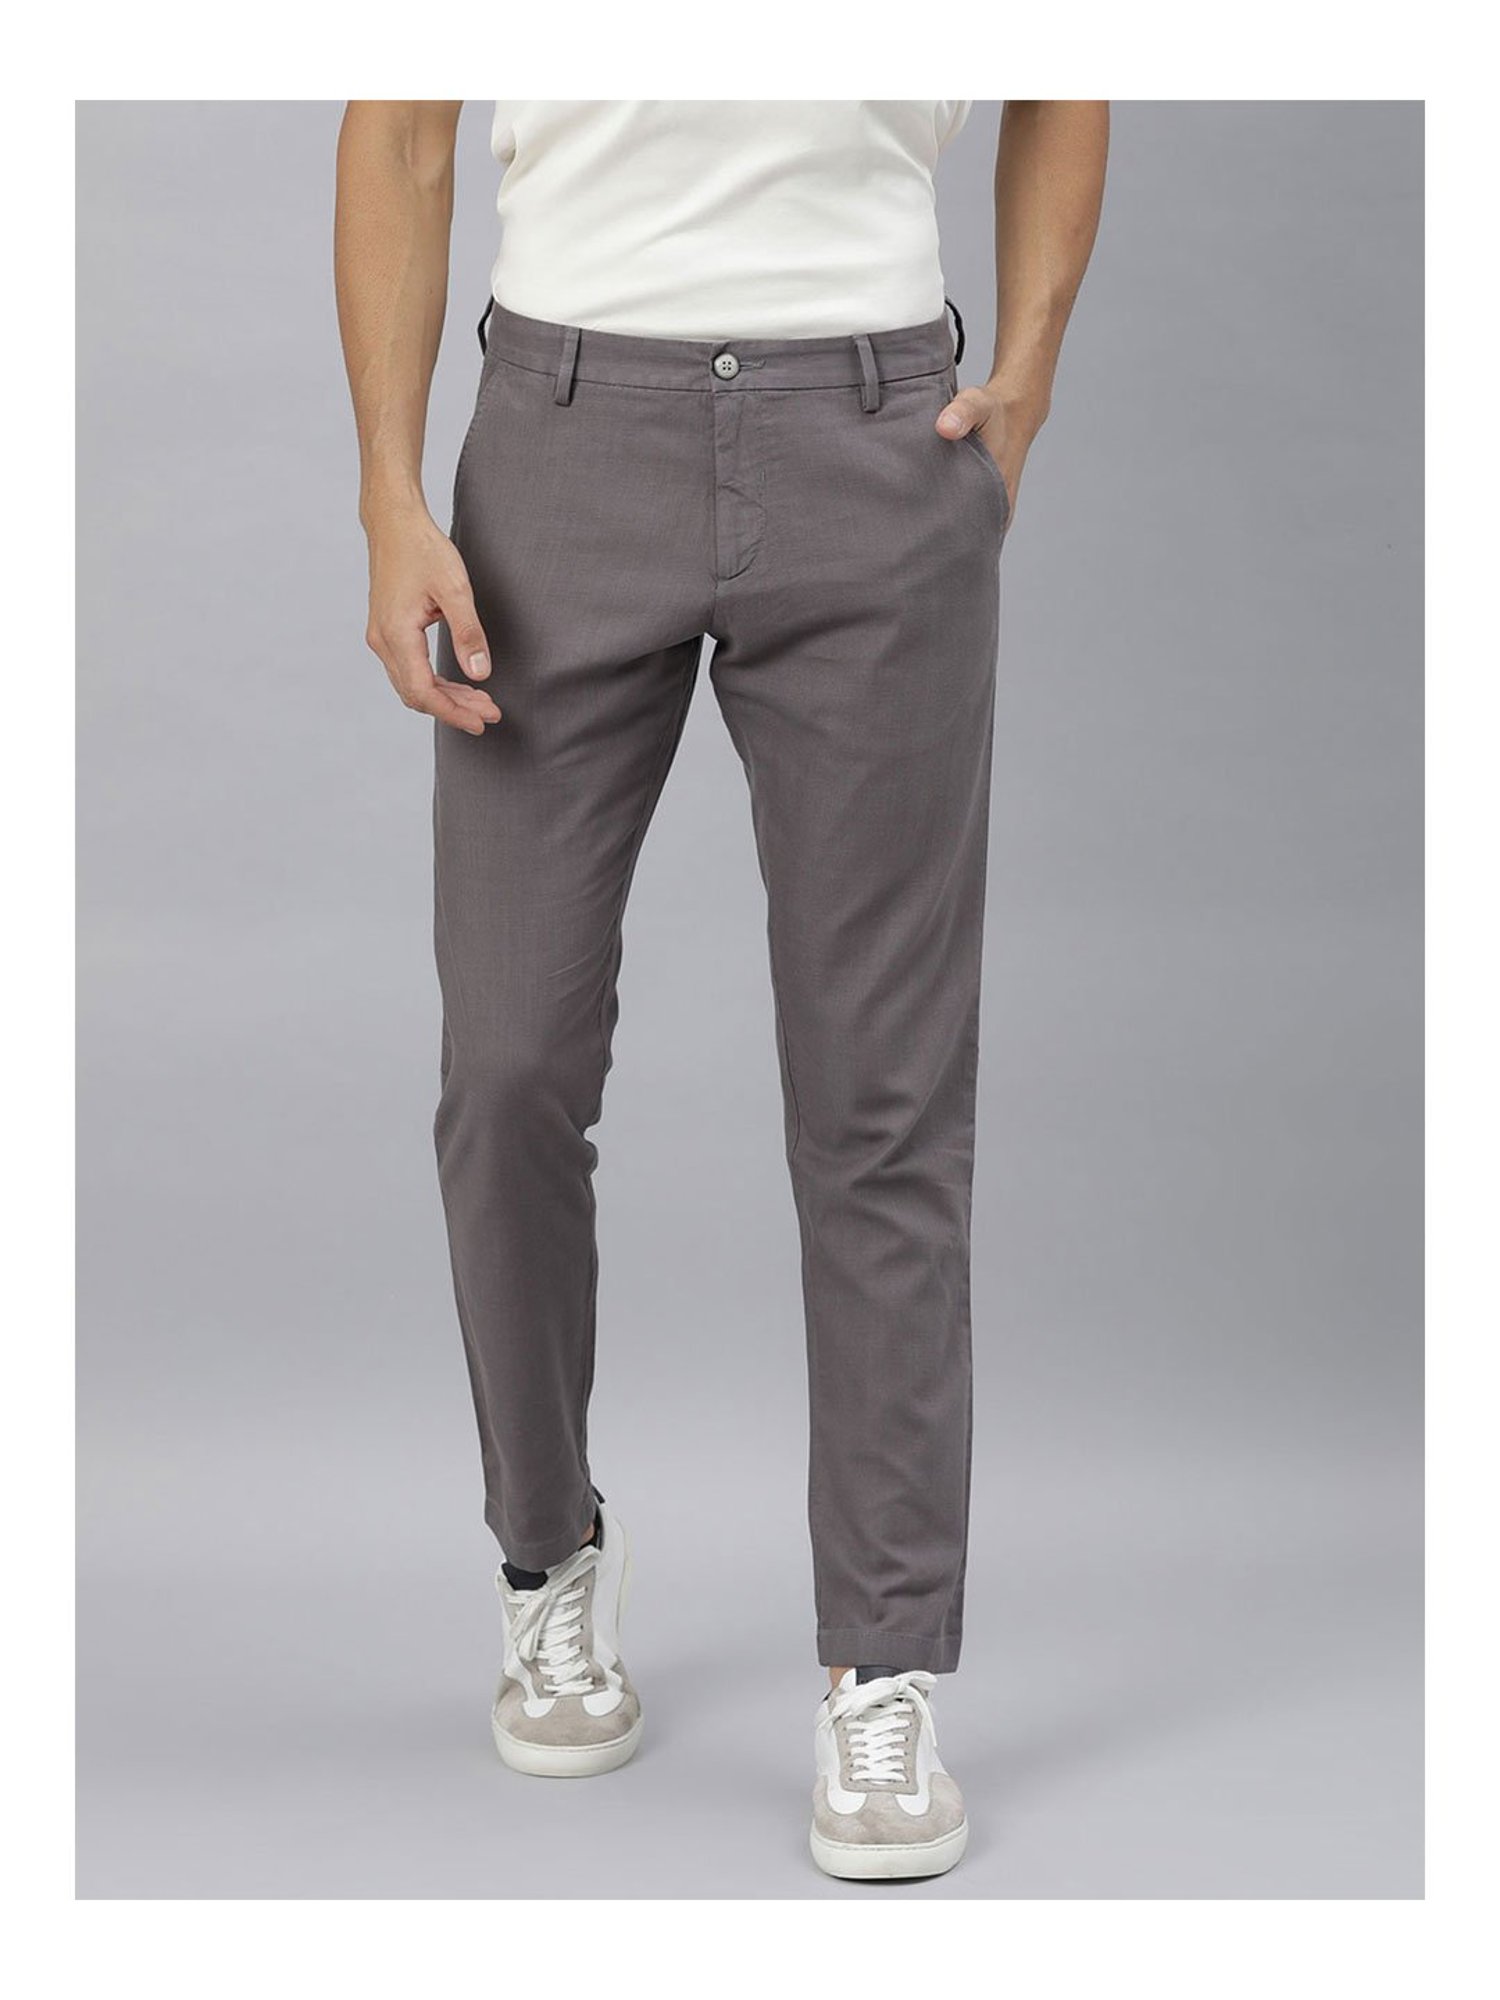 Grey Shirt Matching Pant Ideas  Grey Shirt Combination Pants  TiptopGents